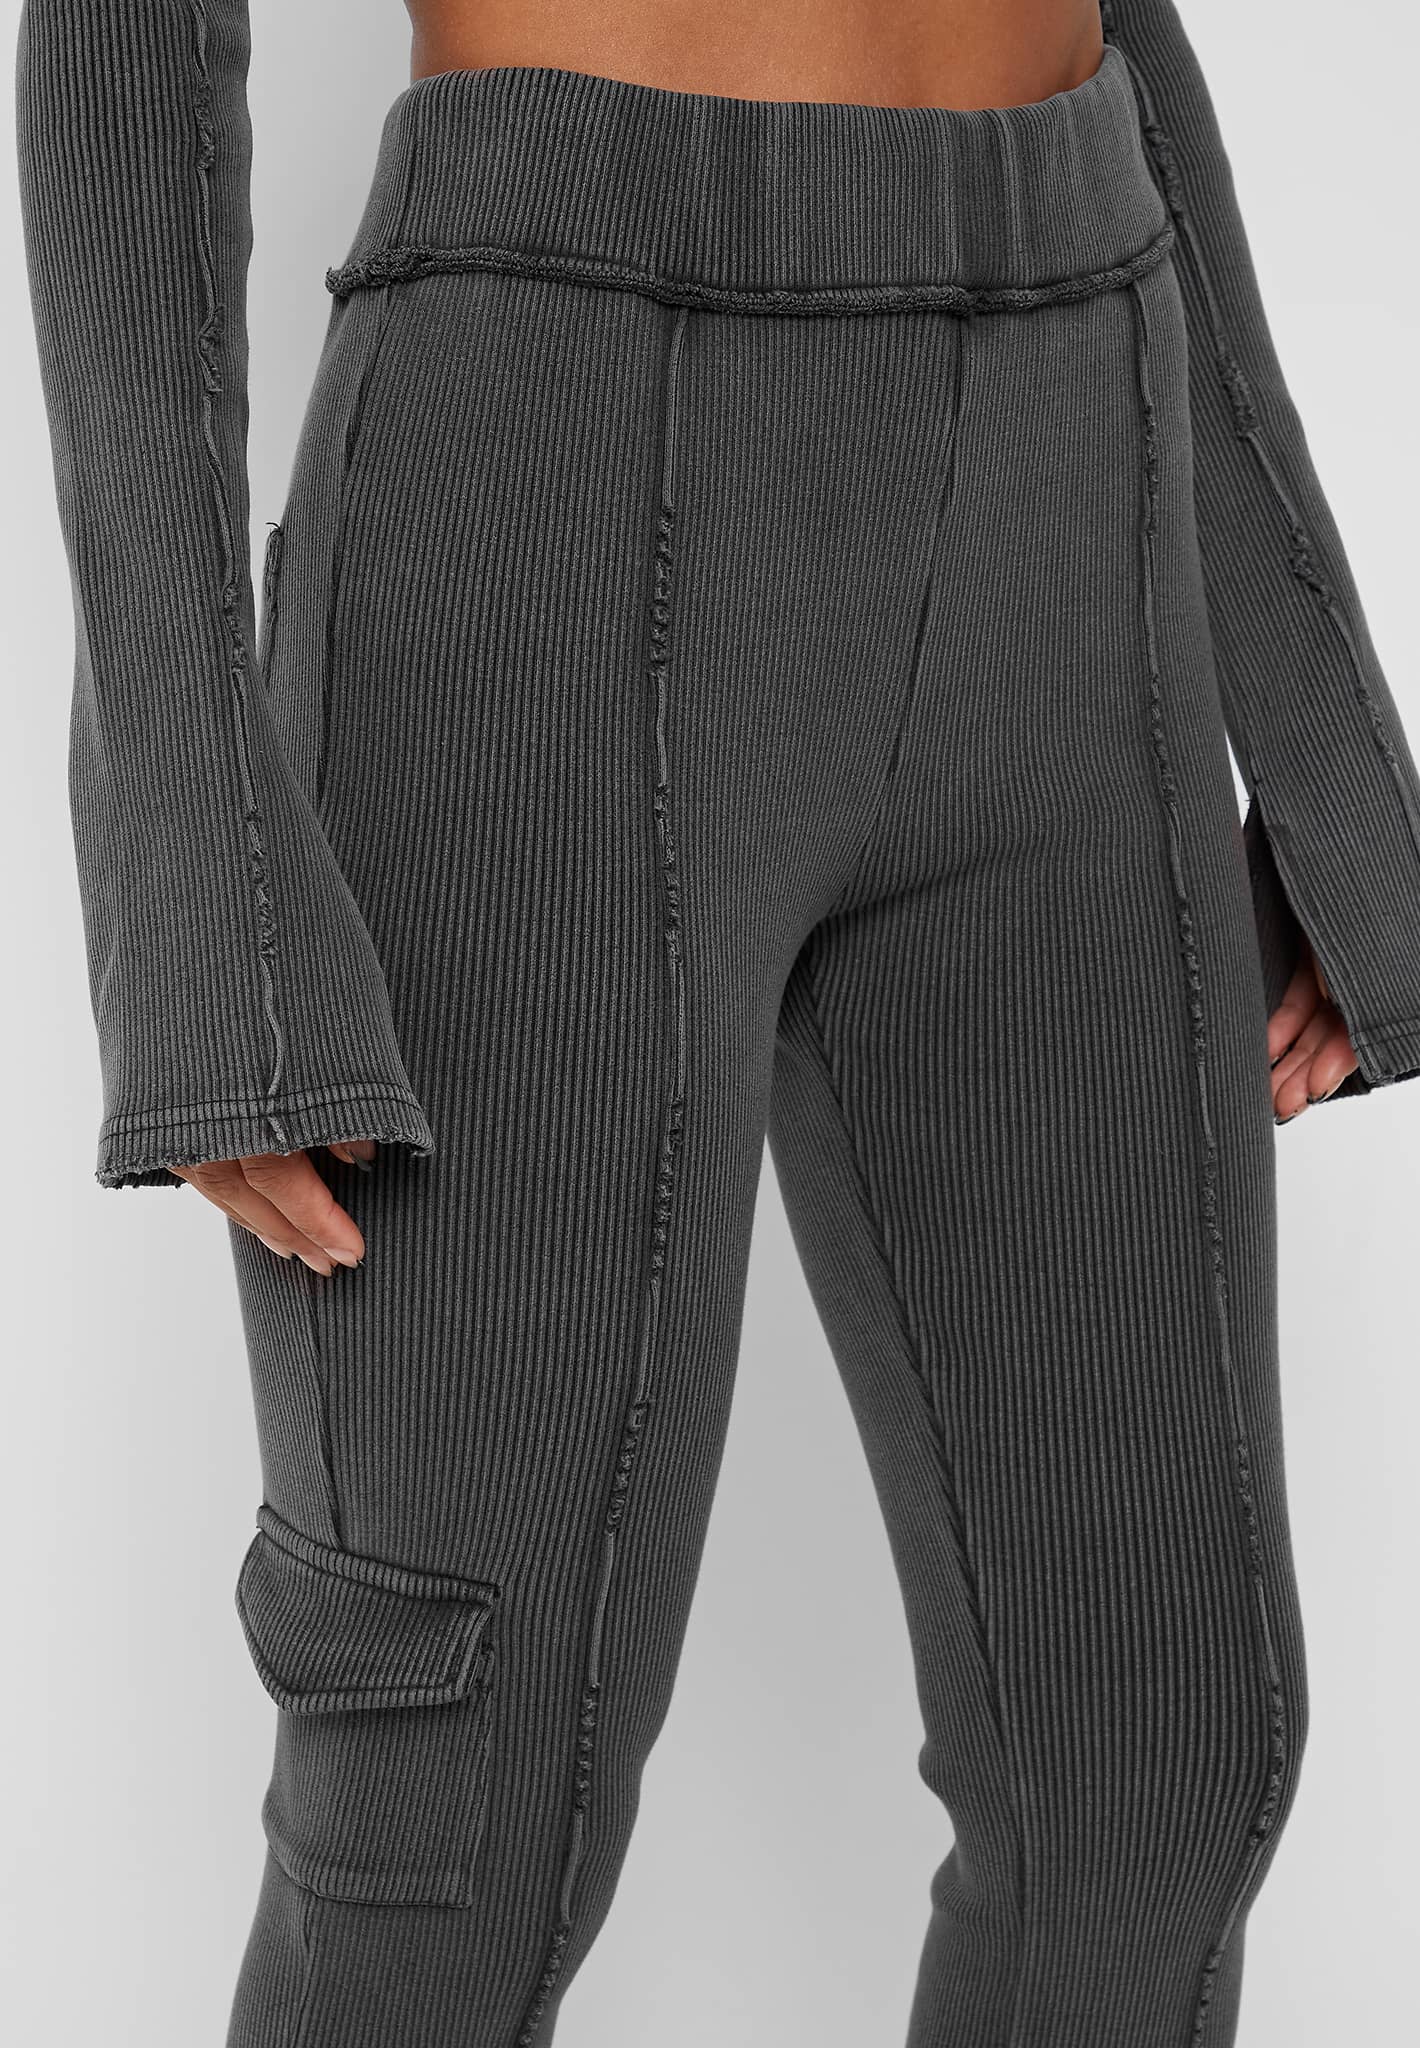 GREY - 'NUNA' - RIBBED SPLIT LEGGING PANTS - DISINO - Fashion Boutique